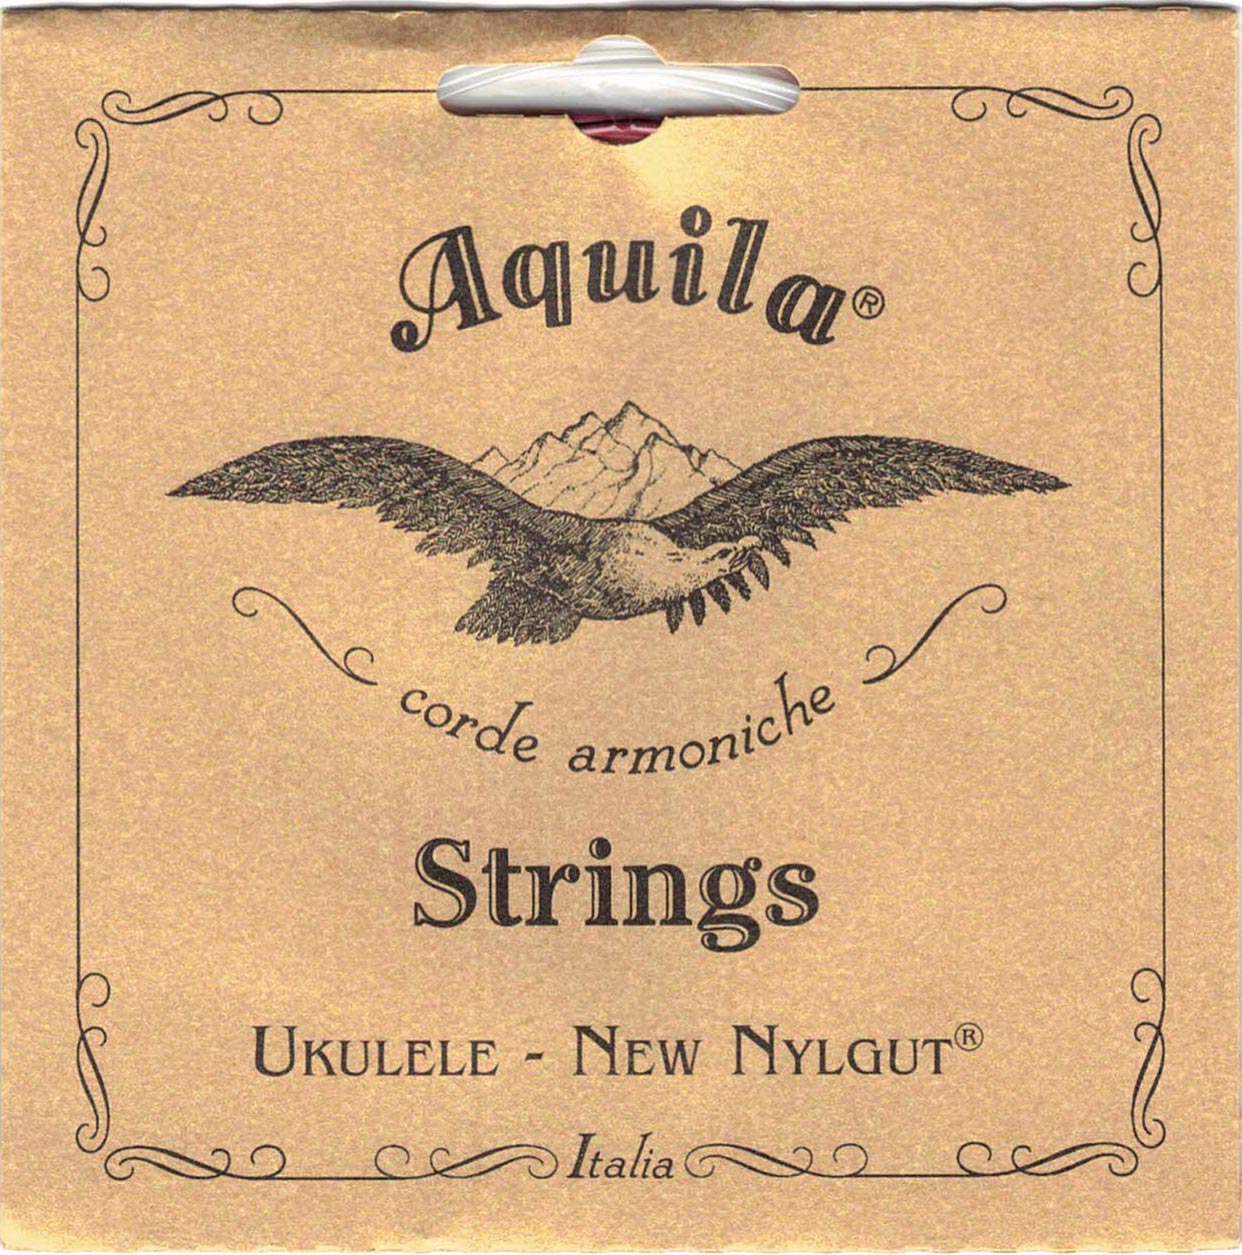 Aquila Ukulele Strings - New Nylgut - Concert